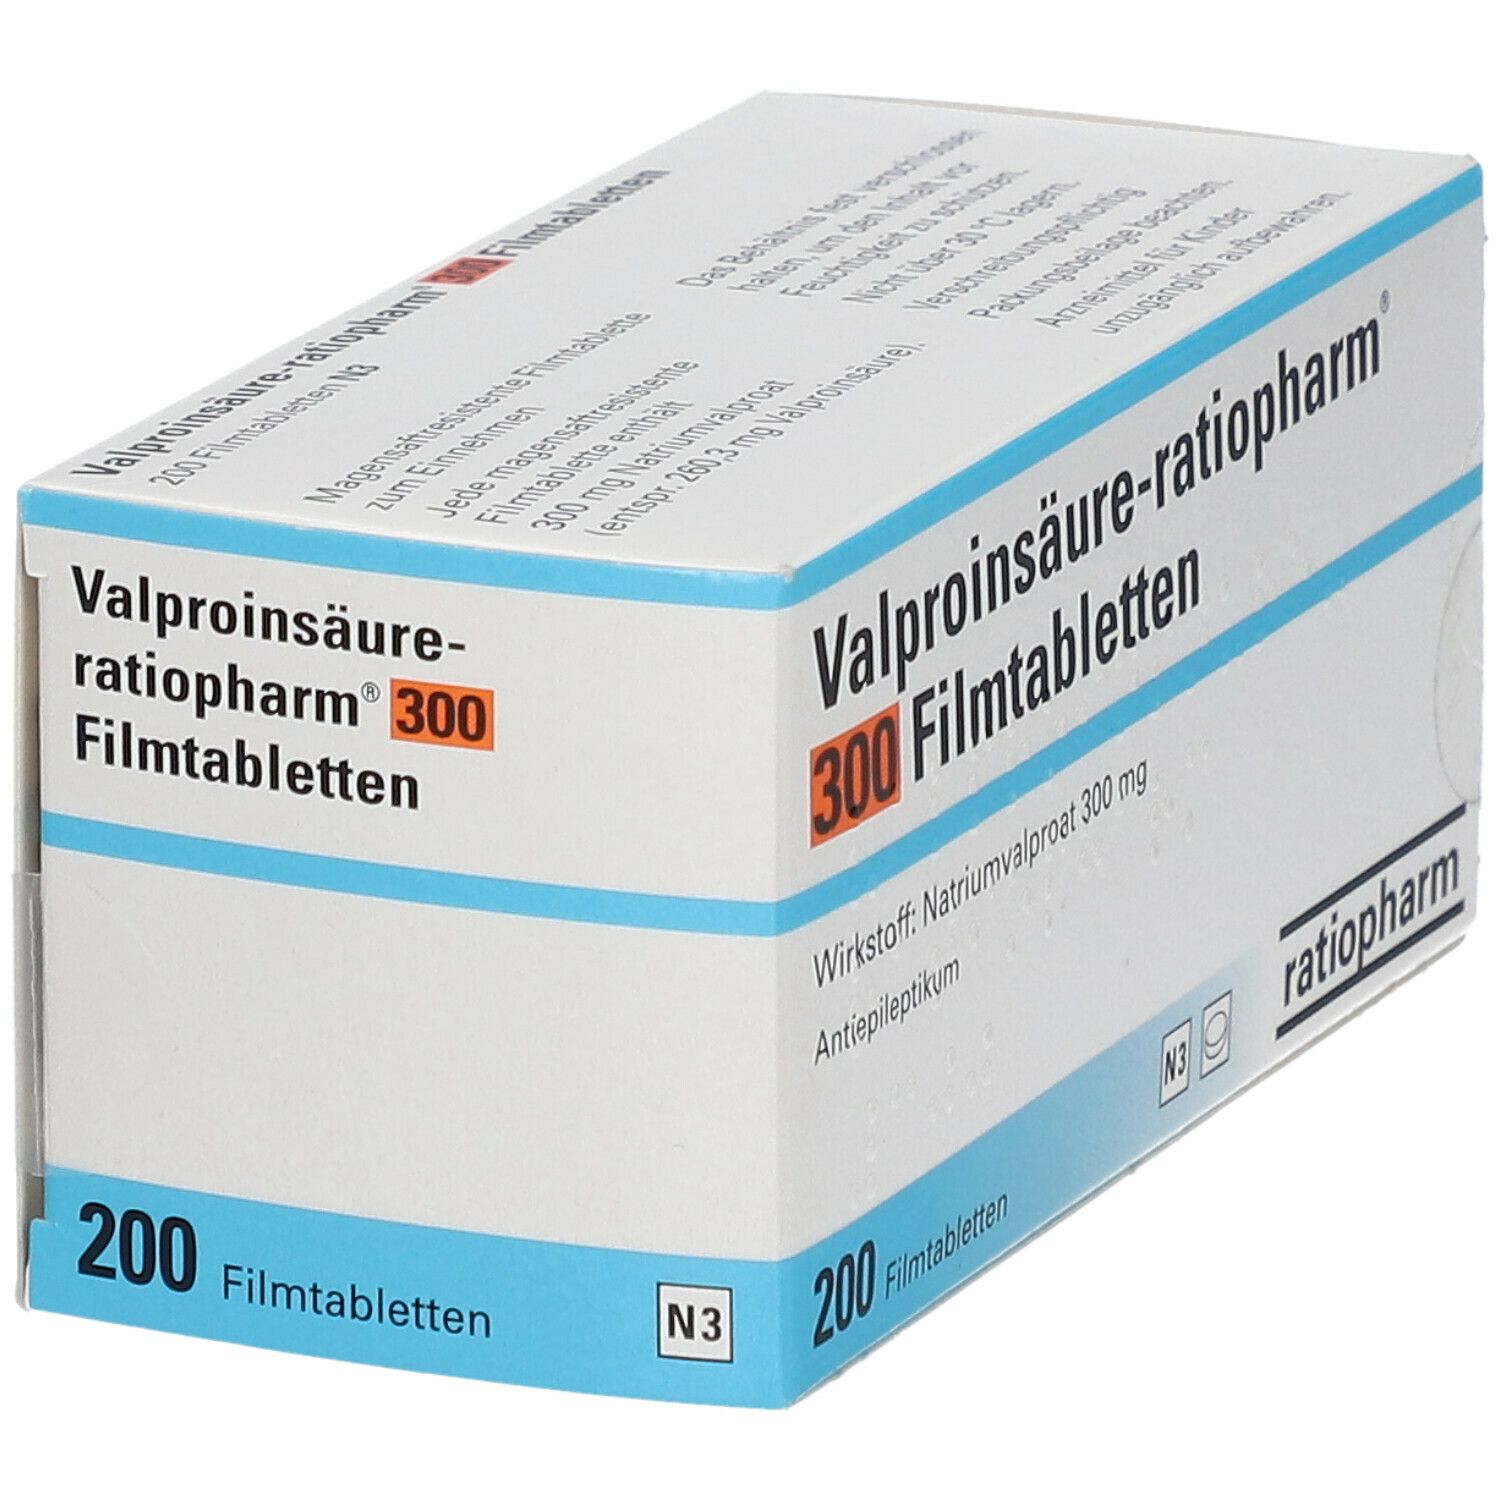 Valproinsäure-ratiopharm® 300